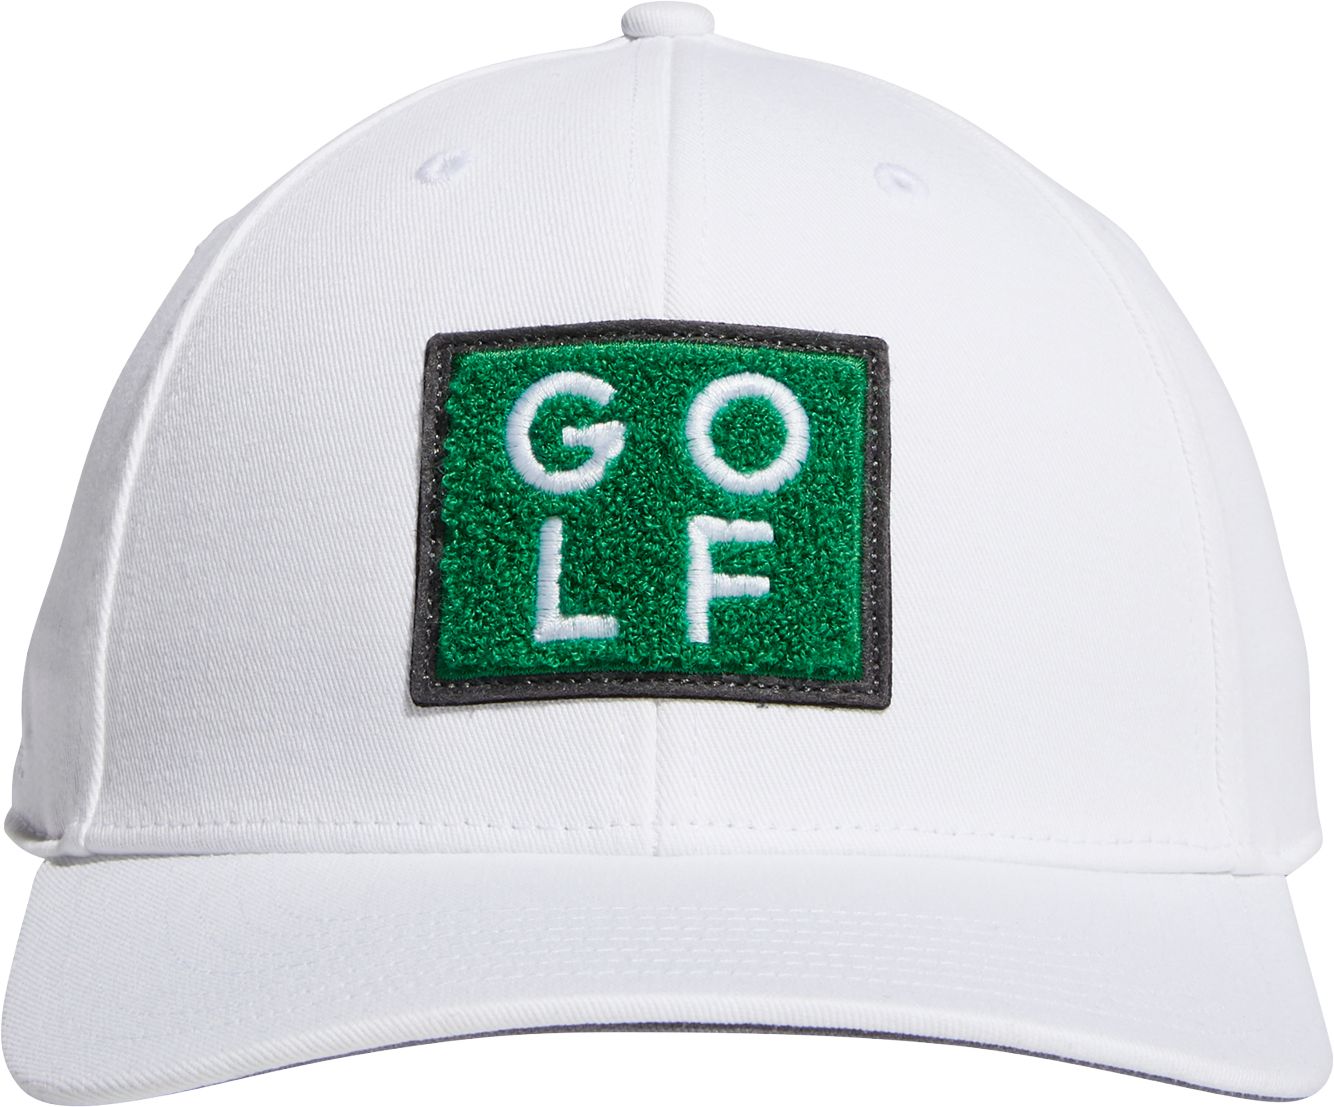 adidas golf visor